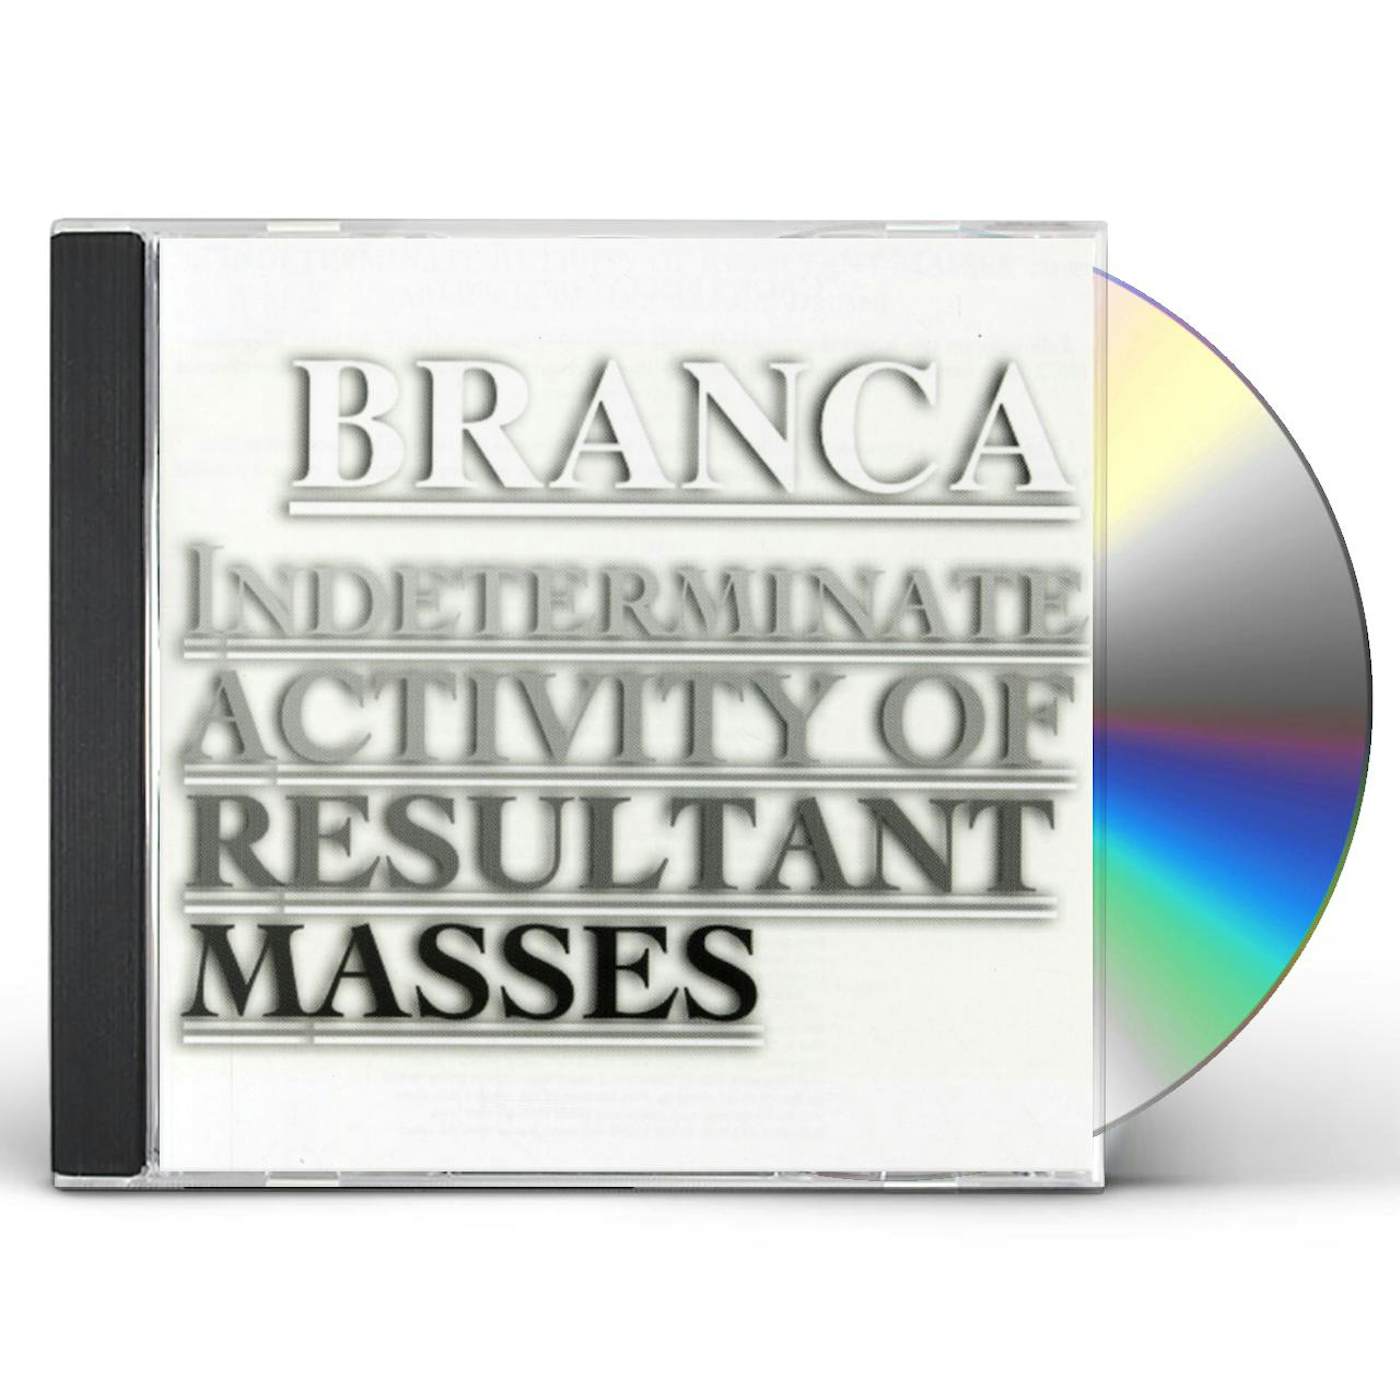 Glenn Branca INDETERMINATE ACTIVITY OF RESULTANT MASSES CD